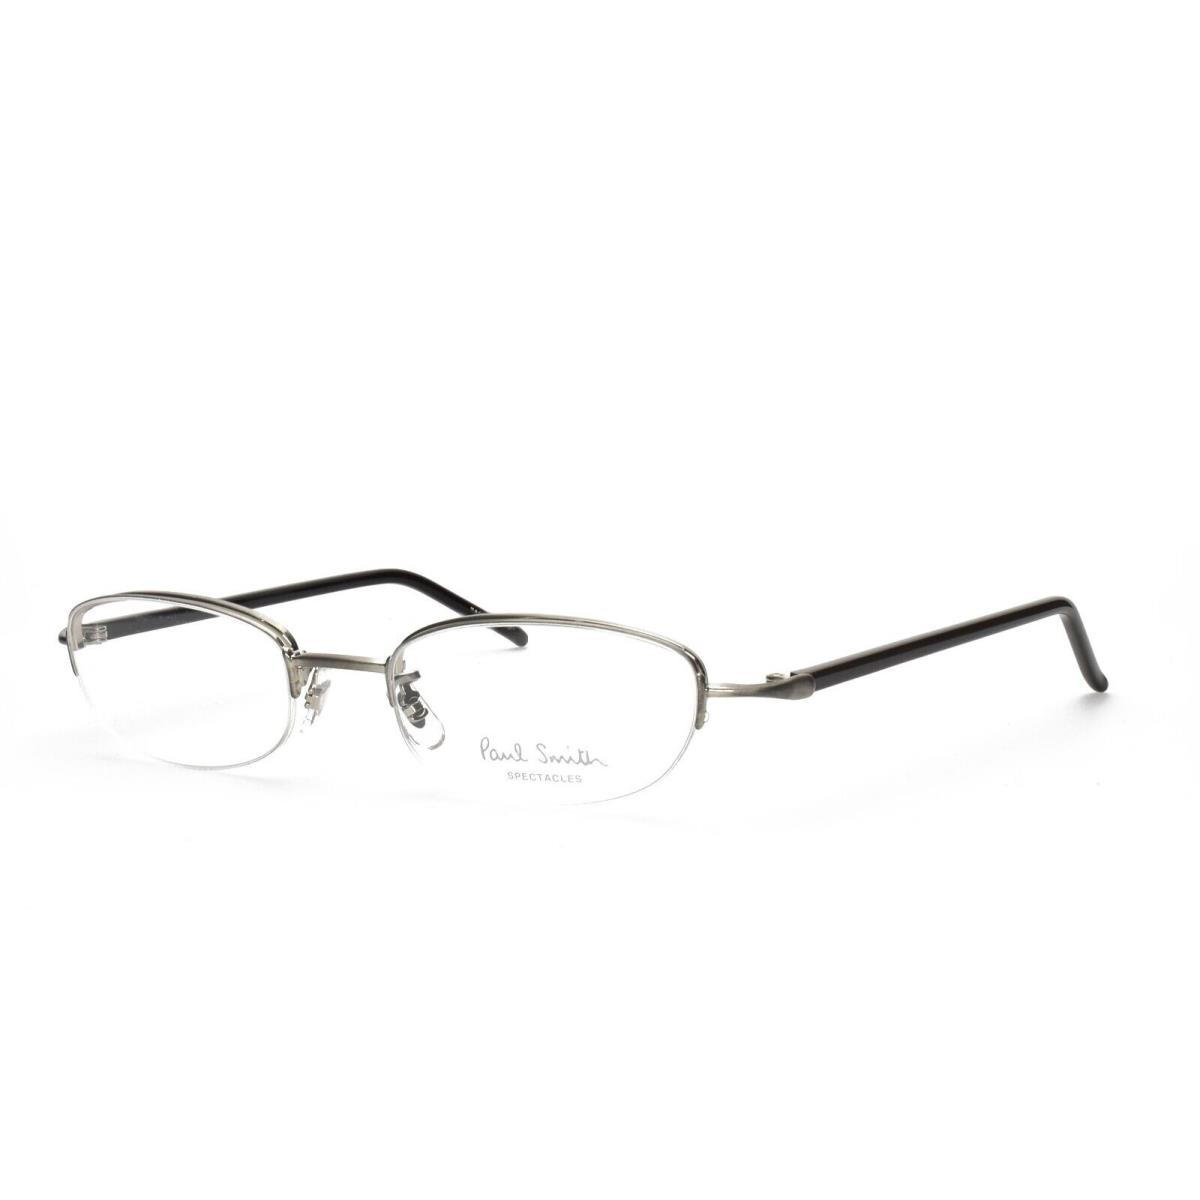 Paul Smith 131 BP 48-19-135 Silver Gray Vtg Vintage Eyeglasses Frames